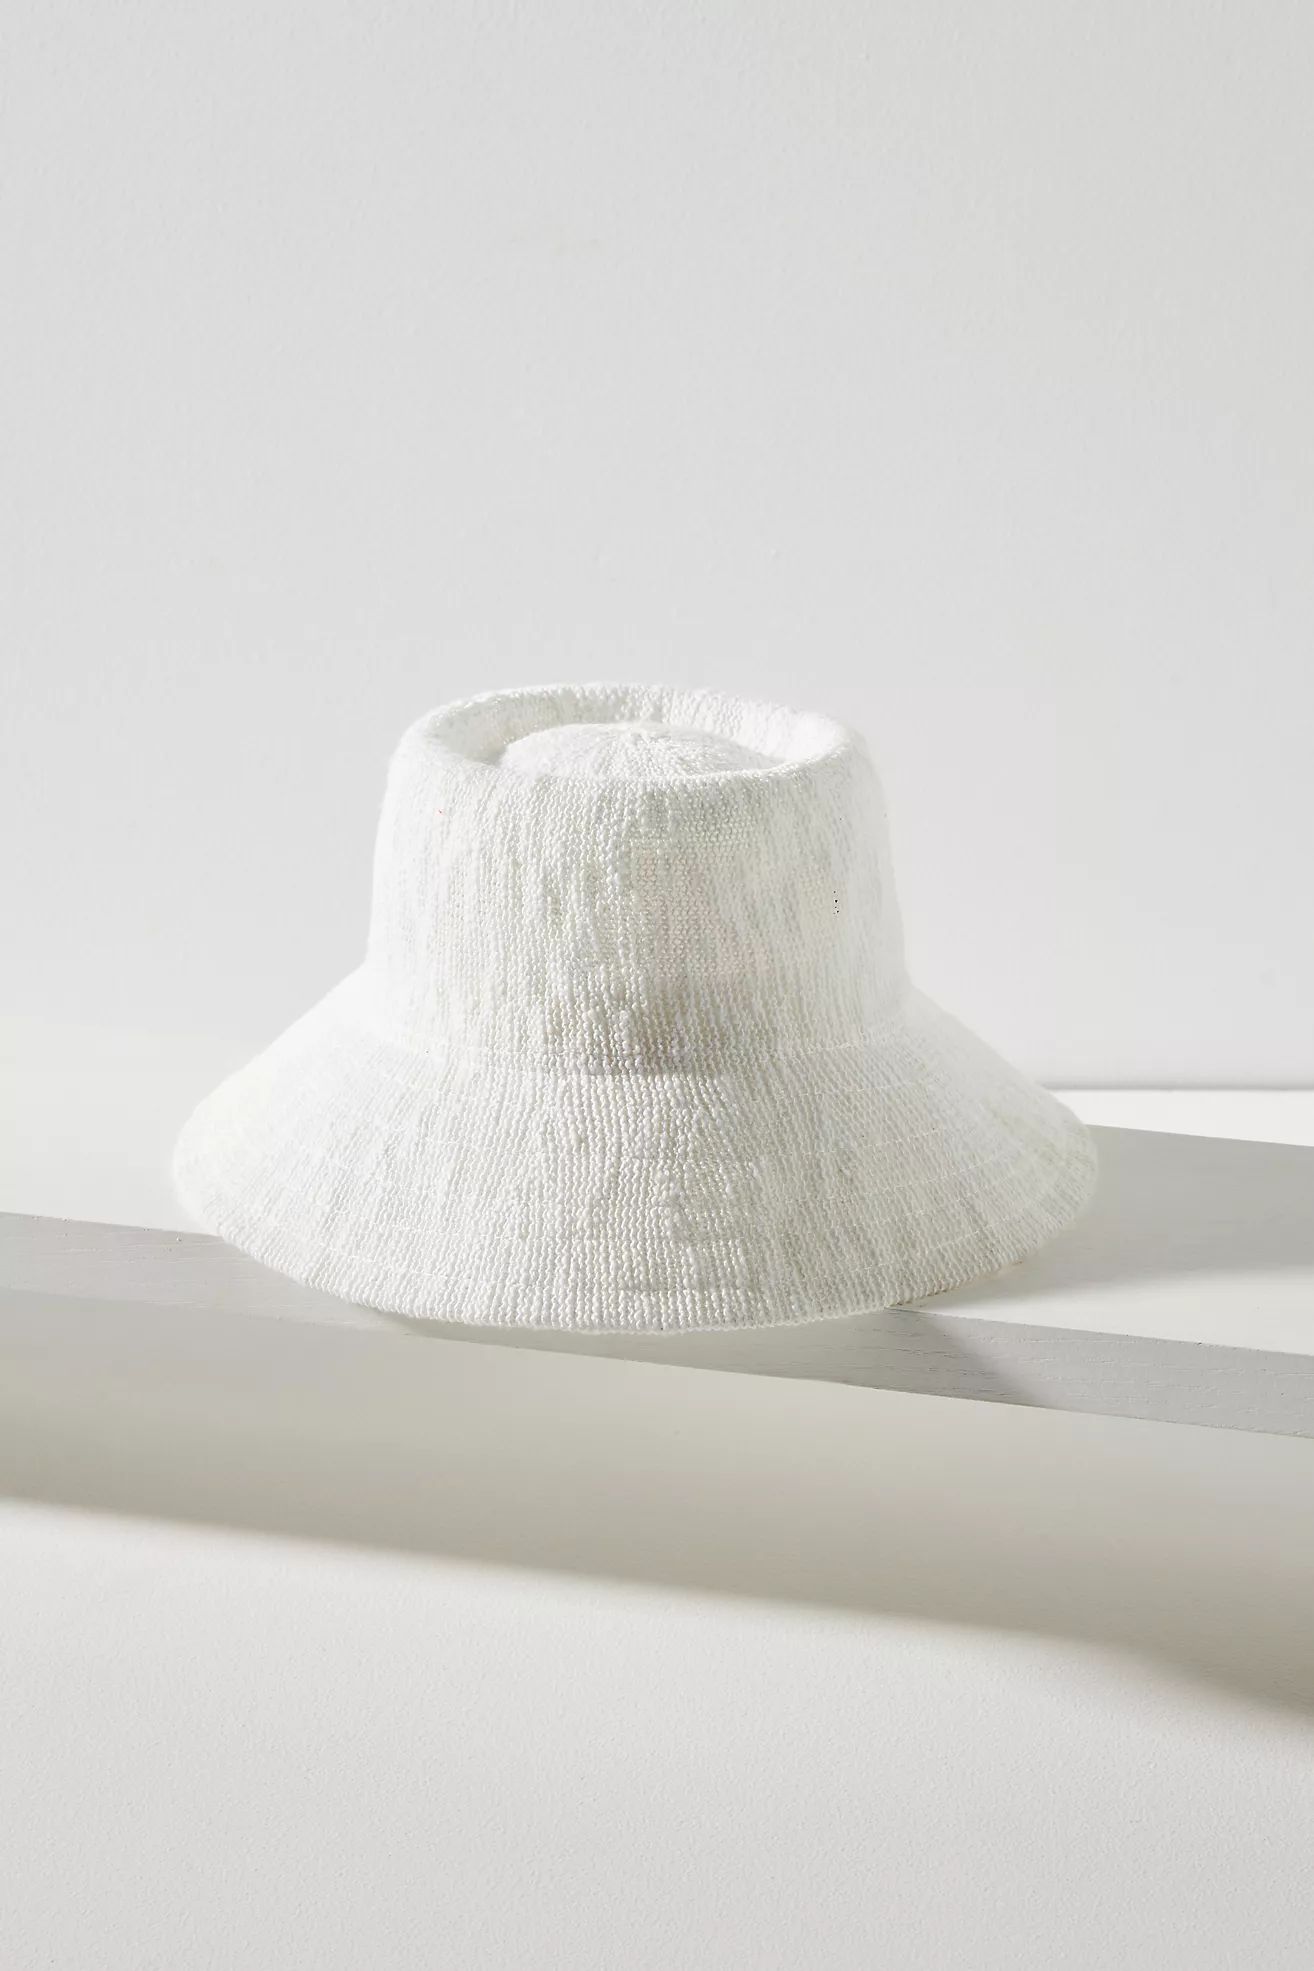 Wyeth Nubby Bucket Hat | Anthropologie (US)